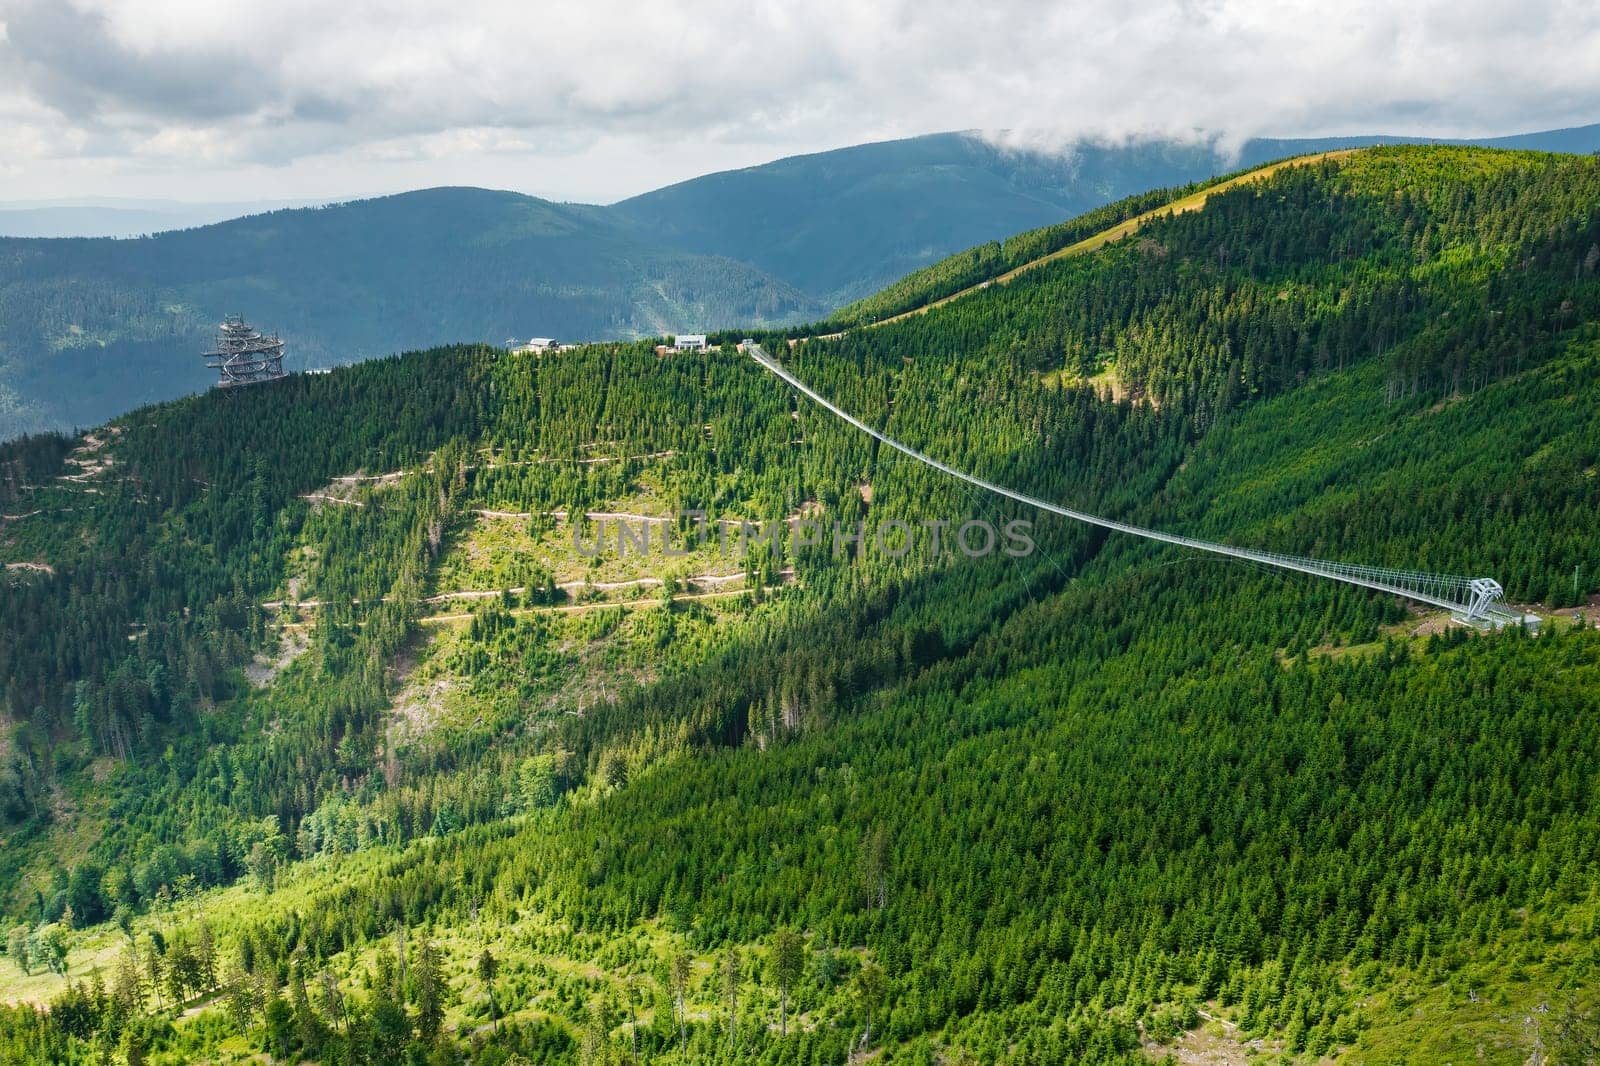 Sky Bridge 721 is the longest suspension bridge between two hills in the forest by vladimka